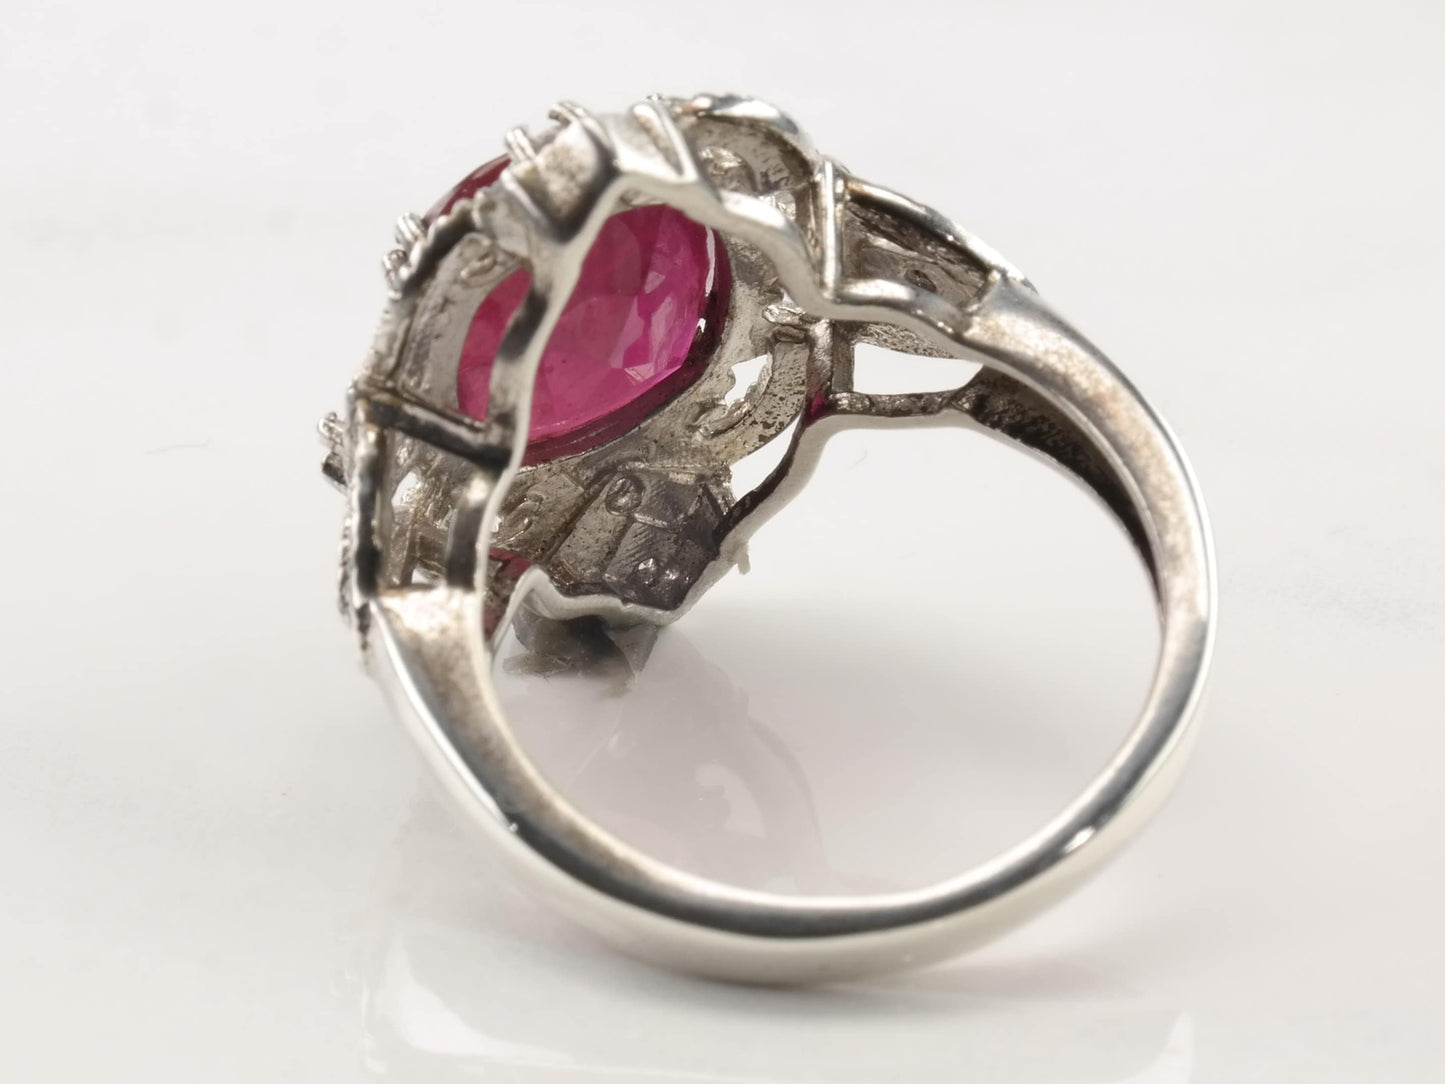 Vintage Modernist Silver Ring Glass Filled Ruby Sterling Size 8 1/4